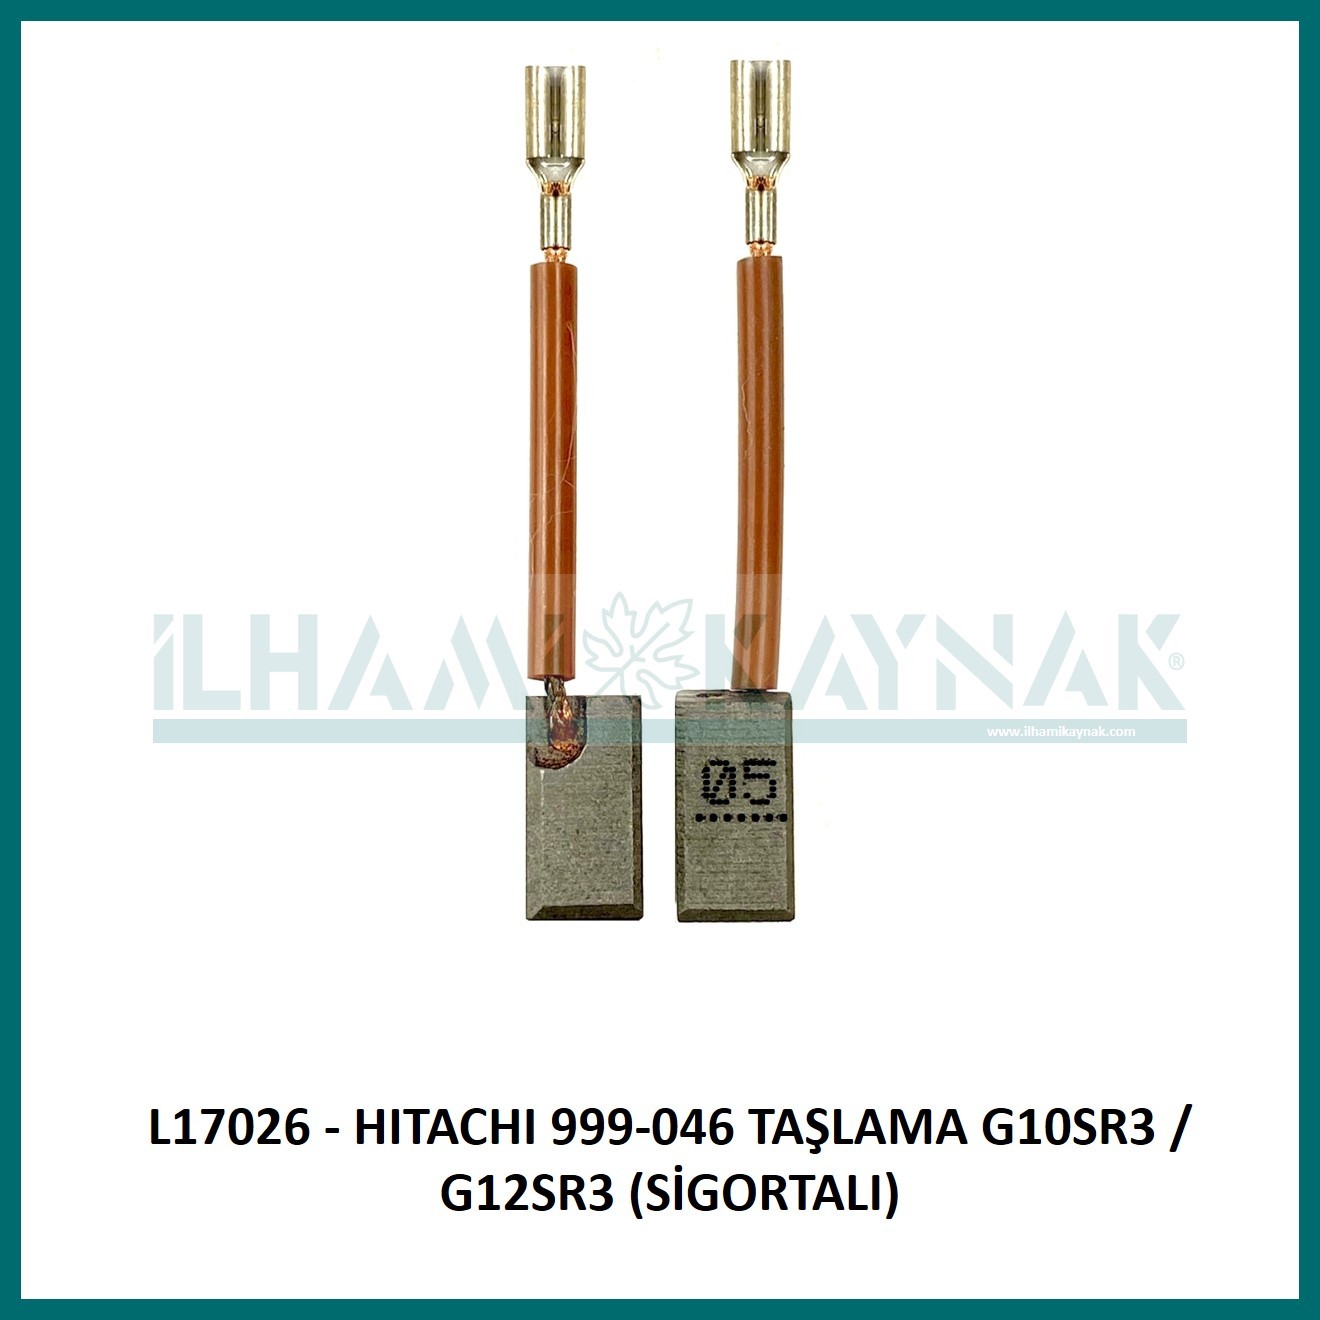 L17026 - HITACHI 999-046 TAŞLAMA G10SR3 / G12SR3 (SİGORTALI) - 6.5*7.5*14  mm - 100 Adet